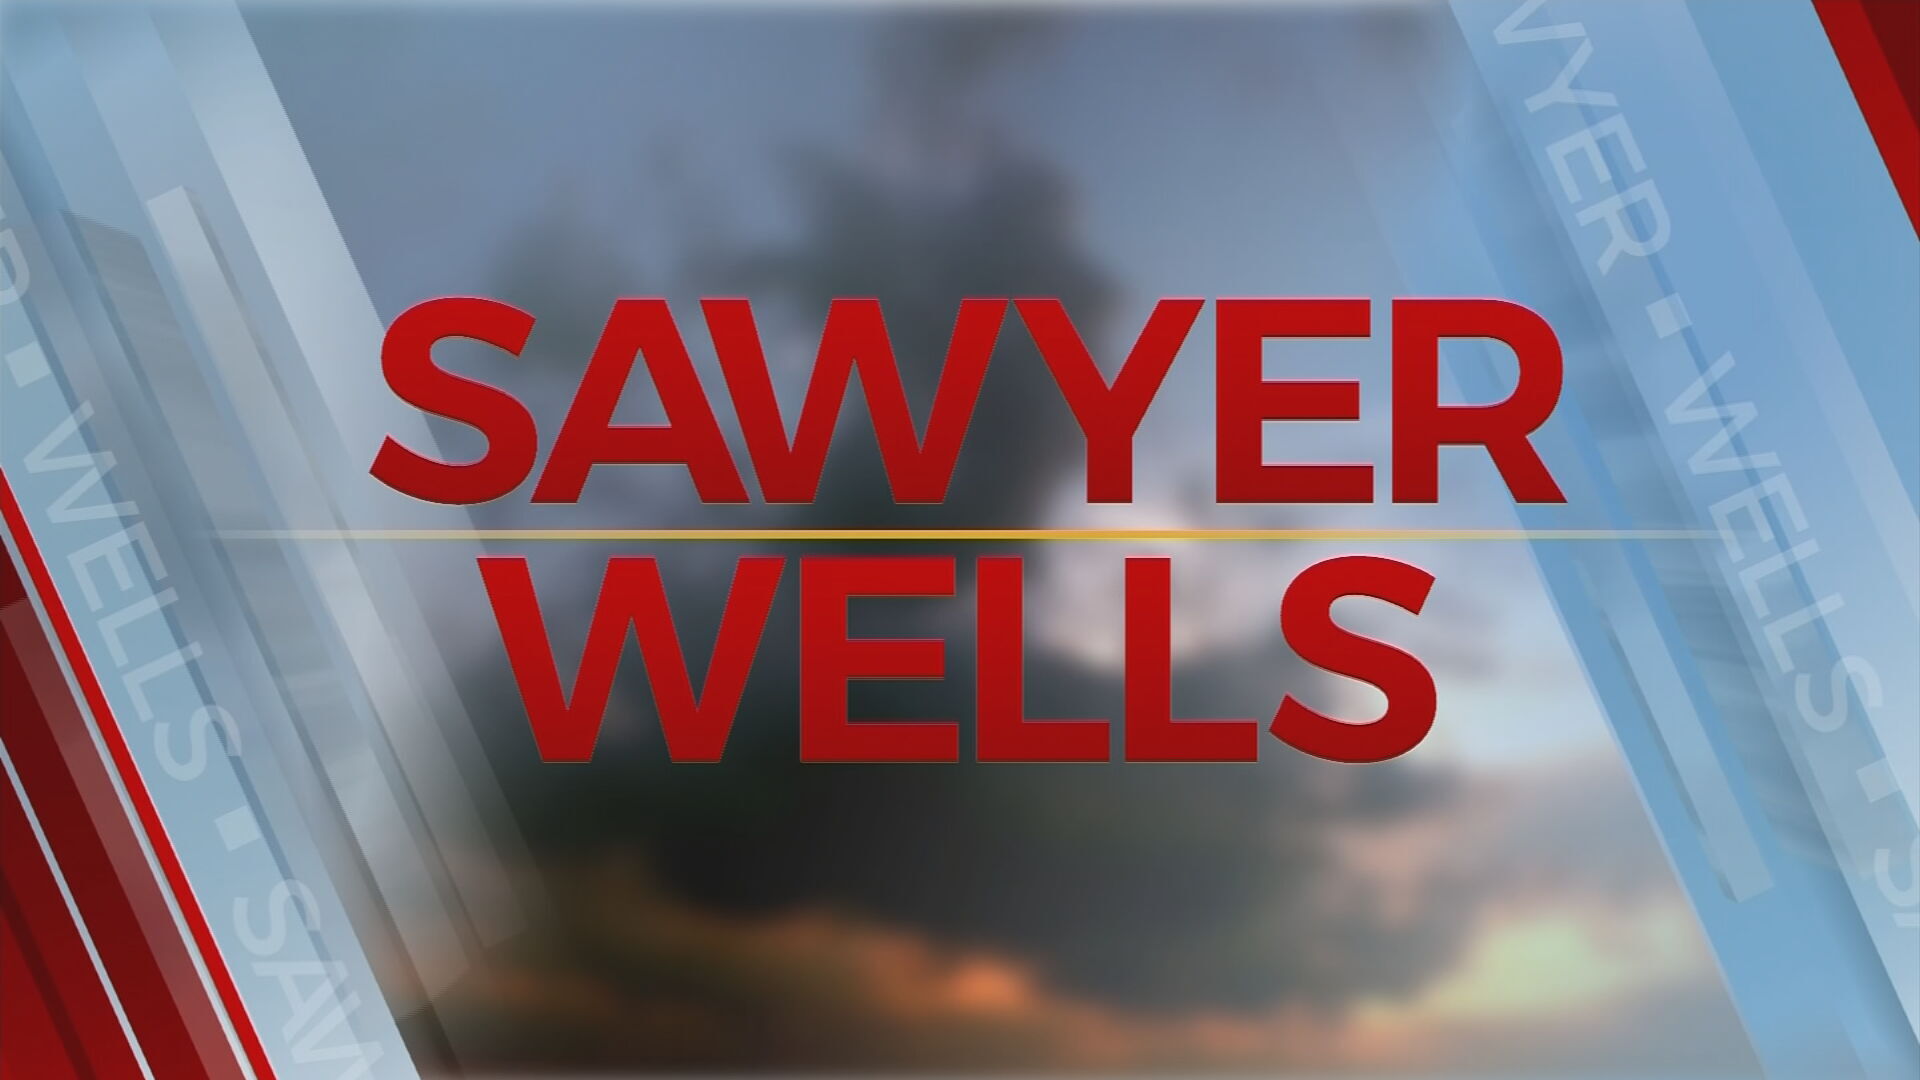 Friday Forecast With Sawyer Wells